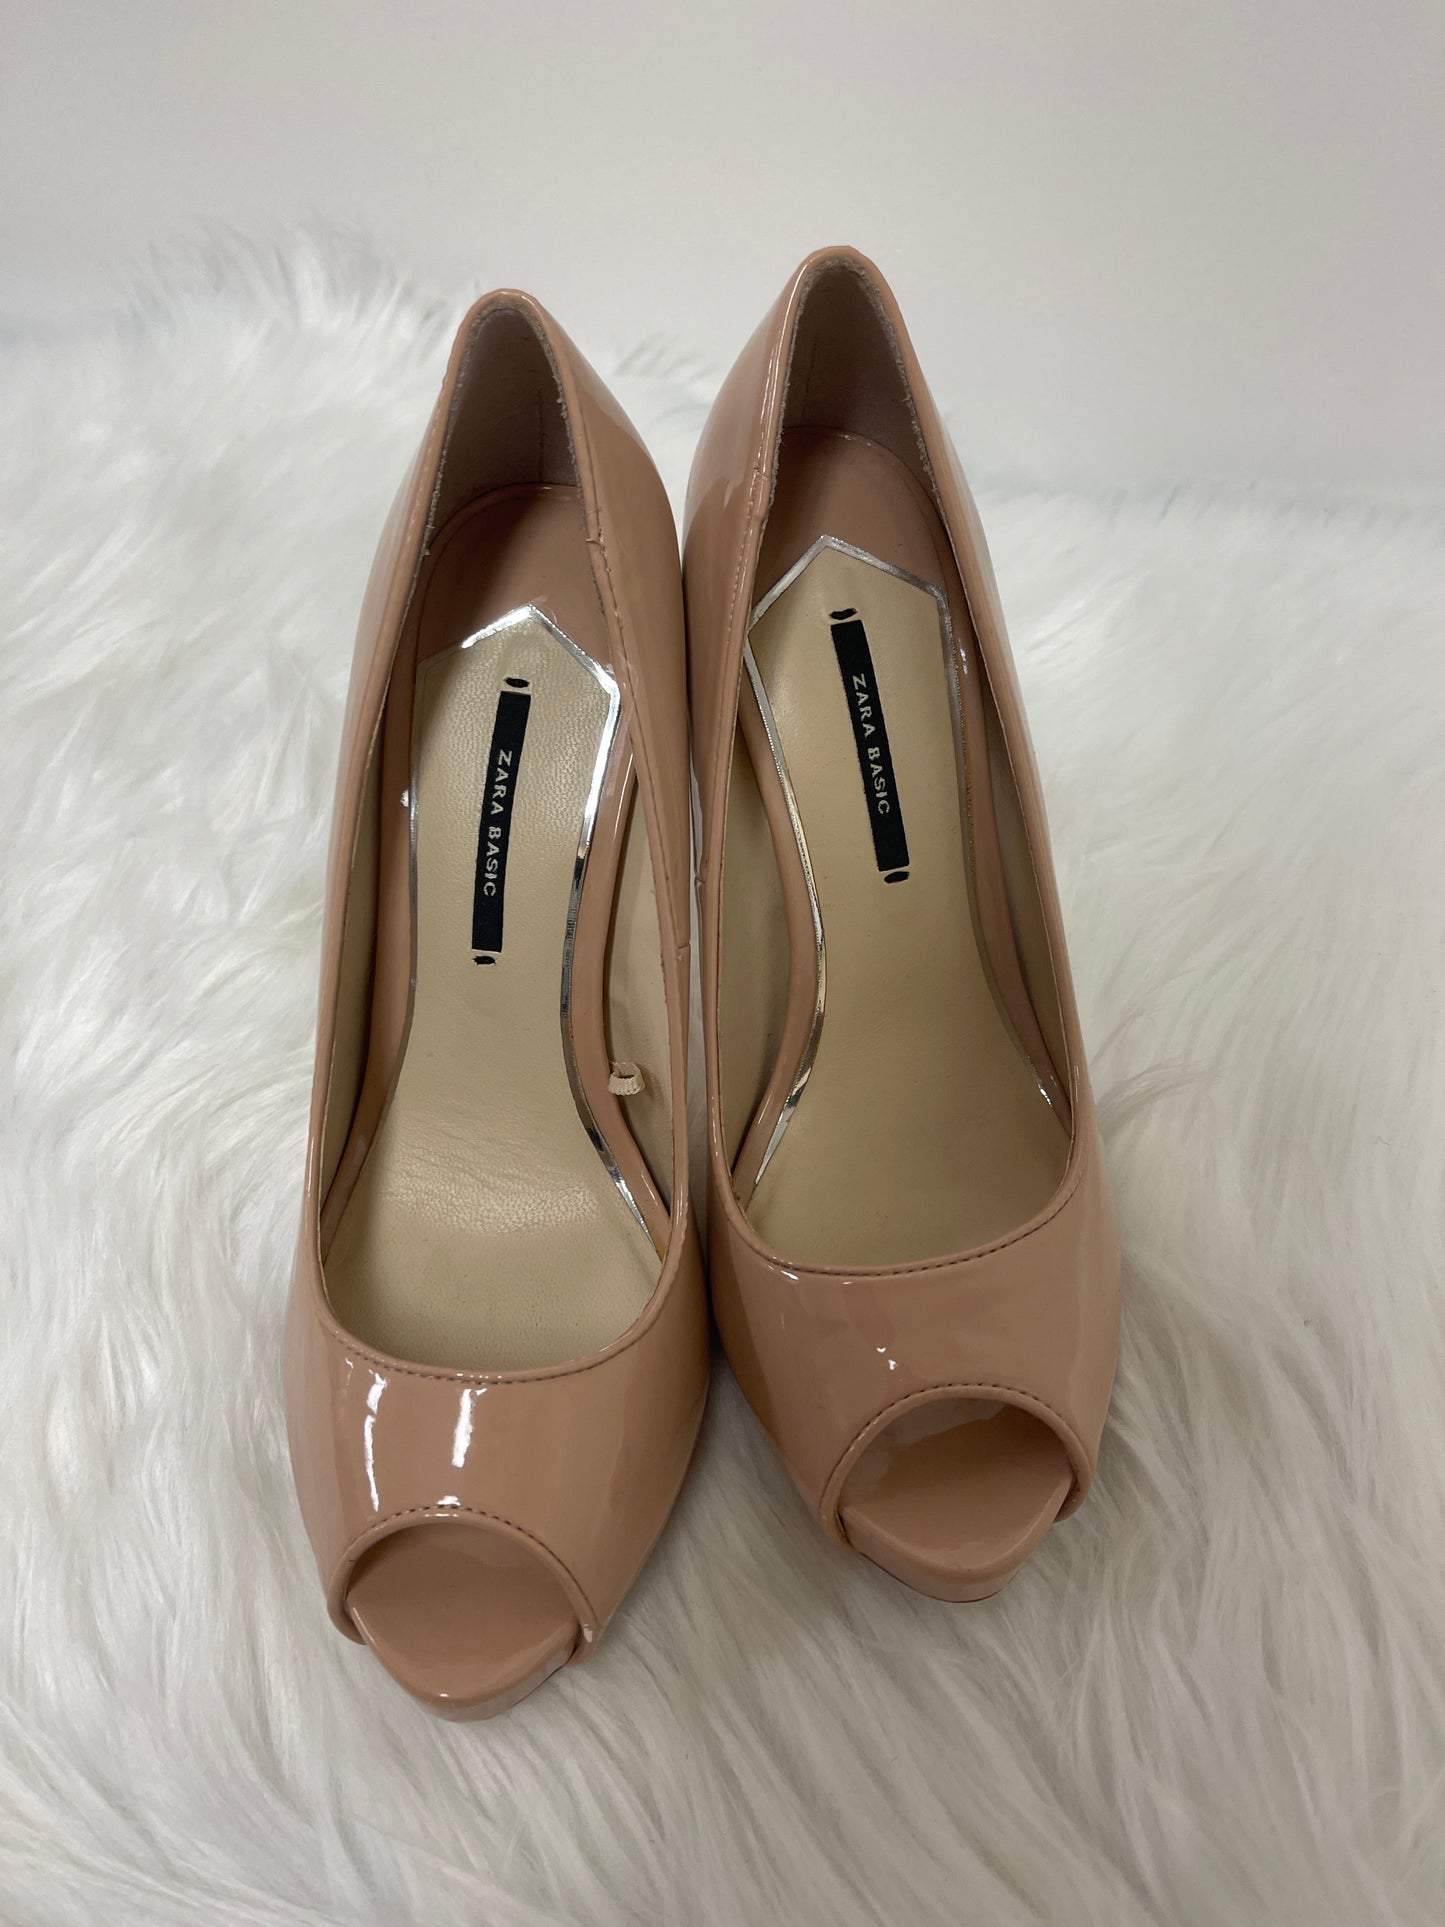 Shoes Heels Stiletto By Zara Basic  Size: 6